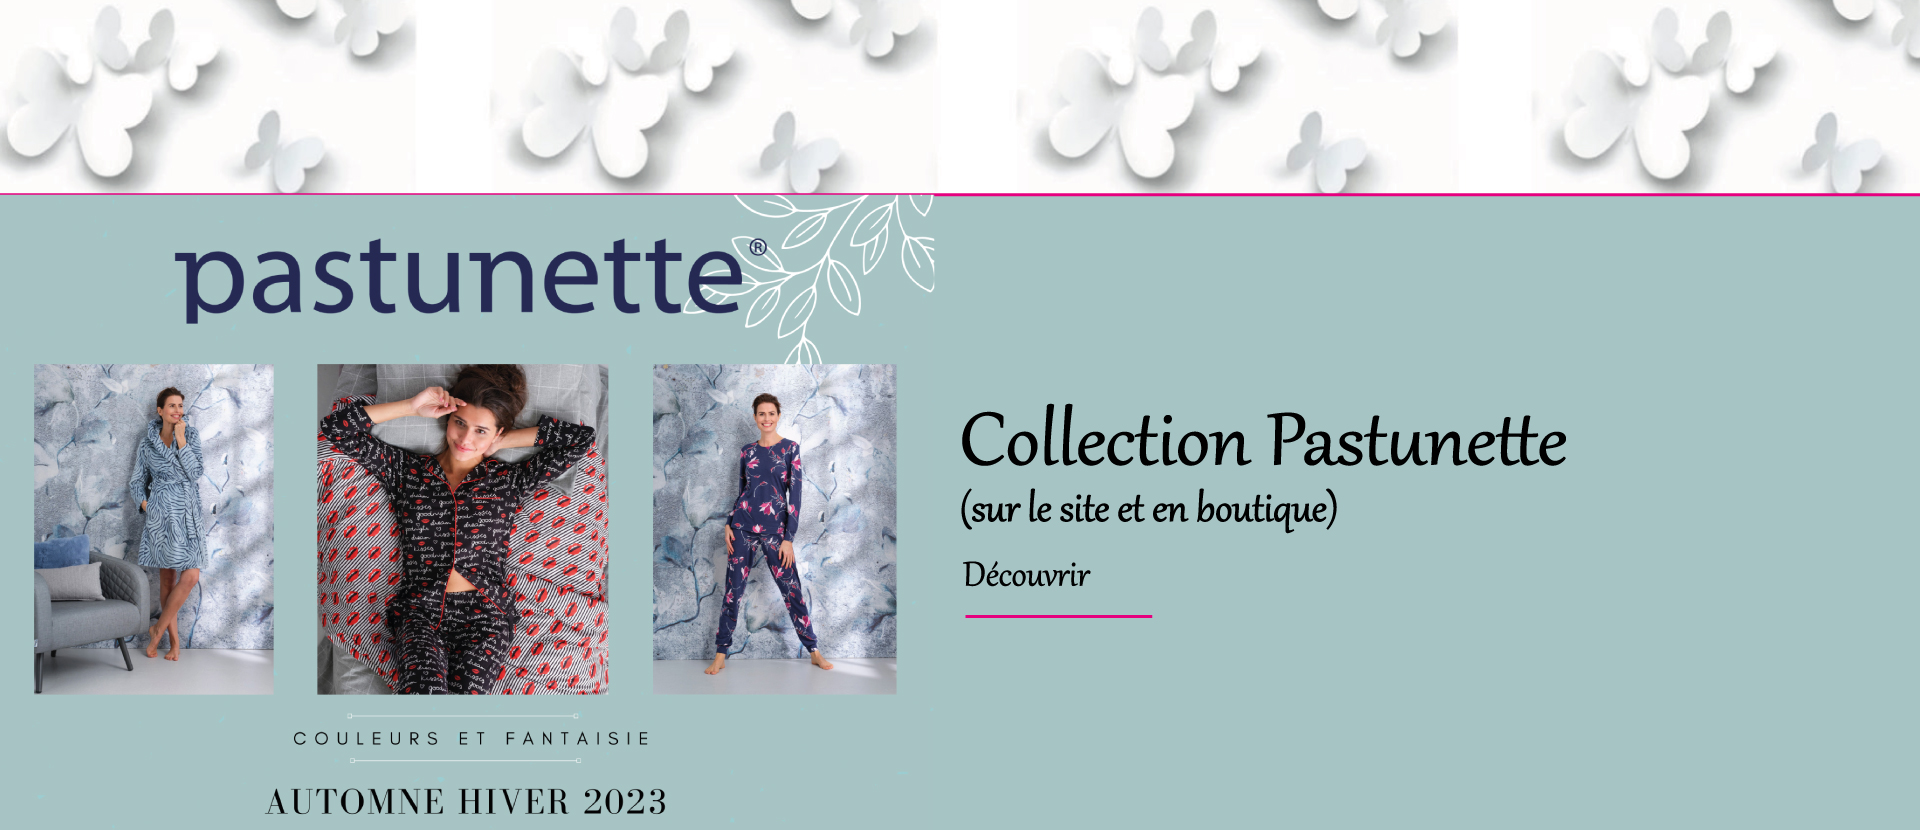 Collection Pastunette